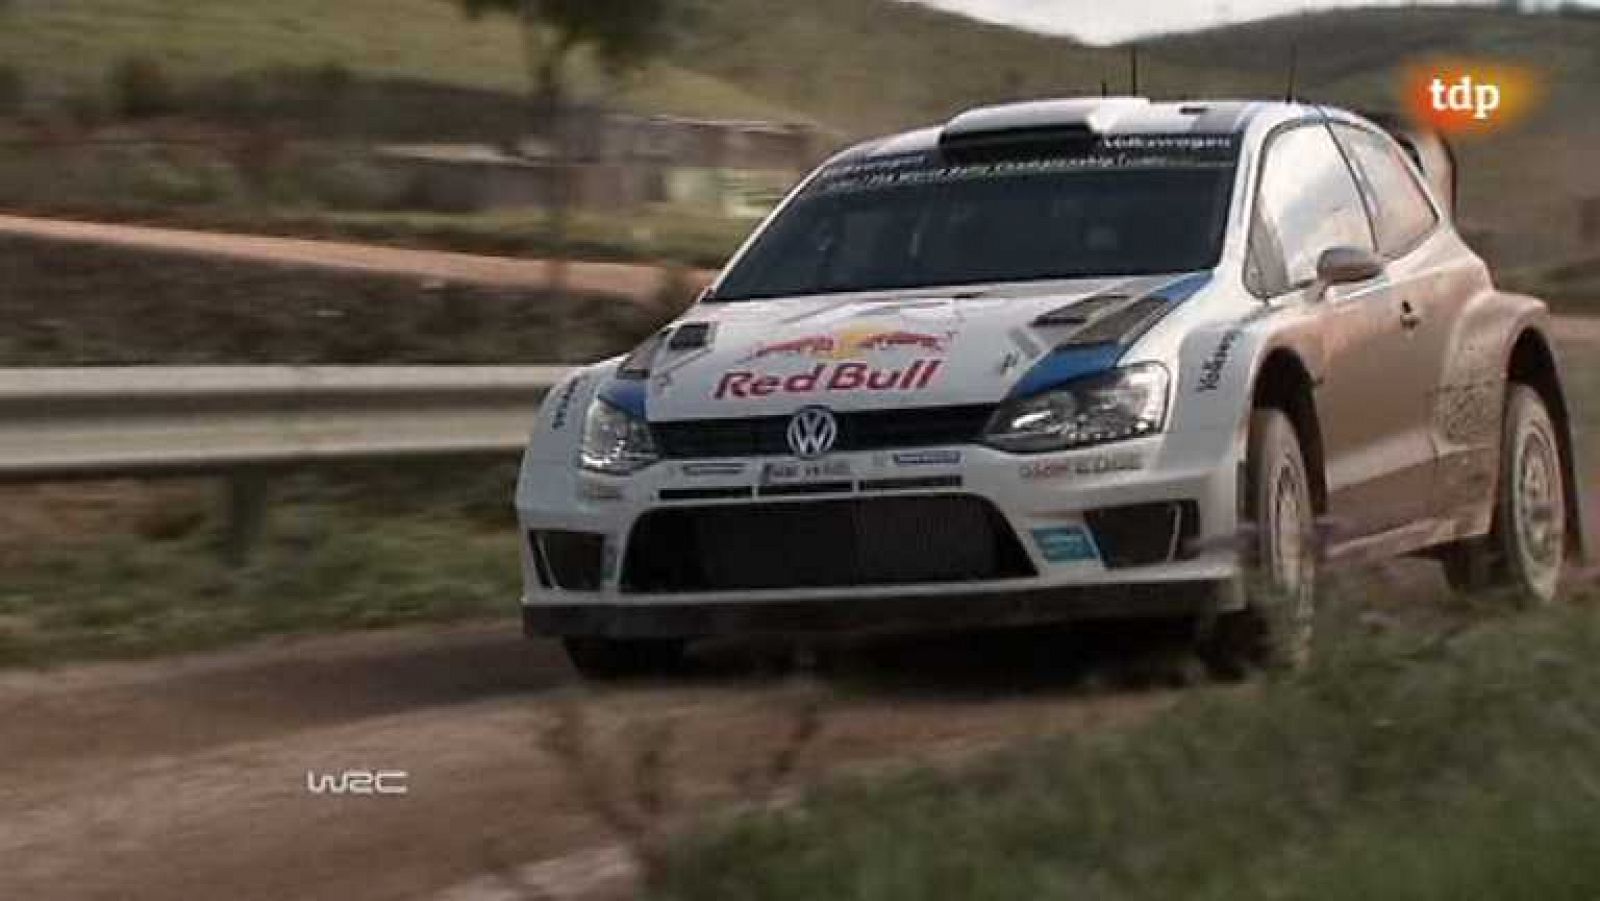 Automovilismo - WRC Campeonato del mundo: Rallye Portugal - resumen 2ªjornada